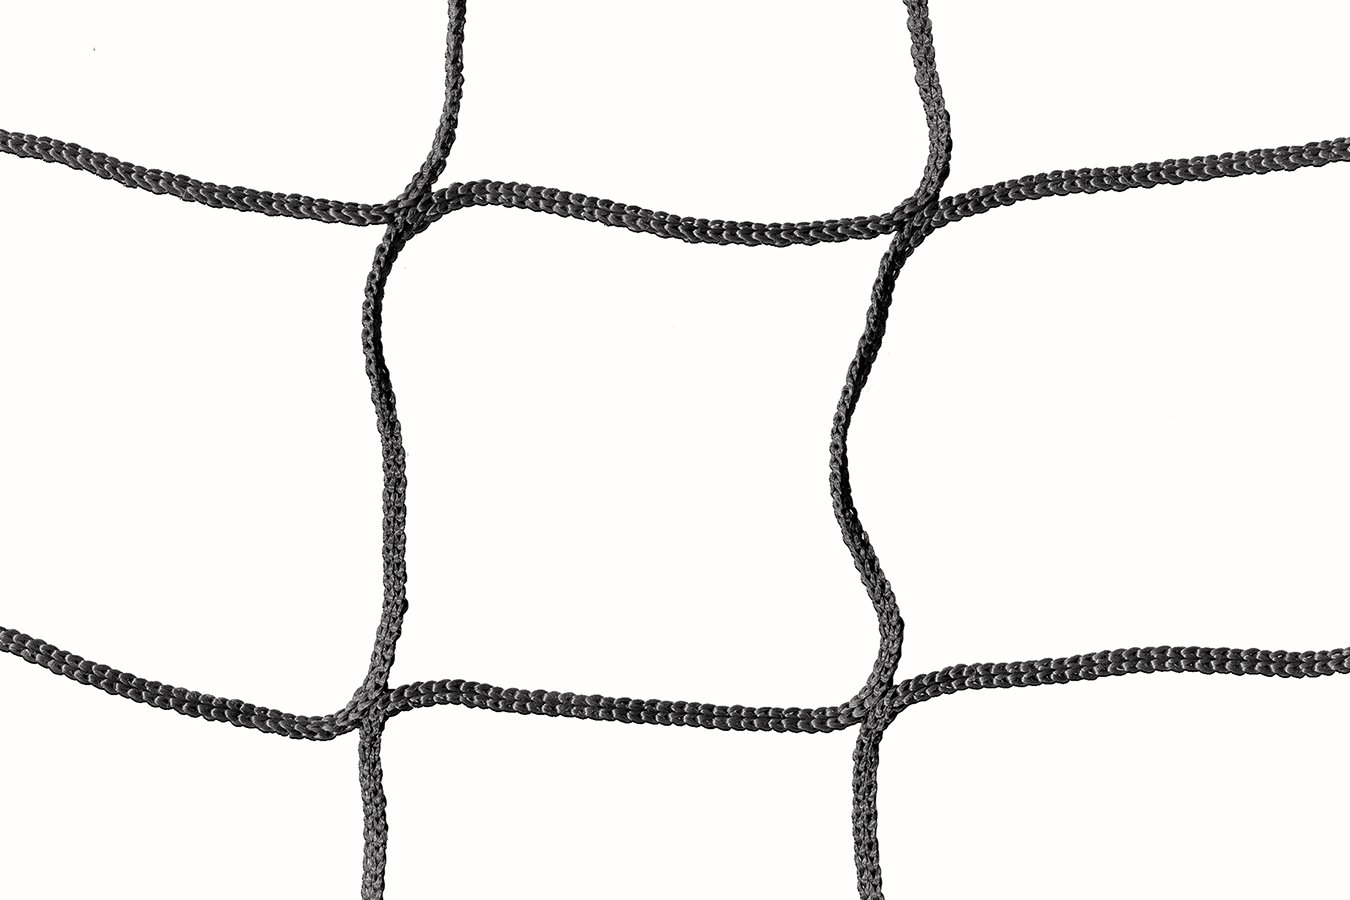 Kwikgoal Soccer Backstop Replacement Net | 3B286 Nets Kwikgoal 